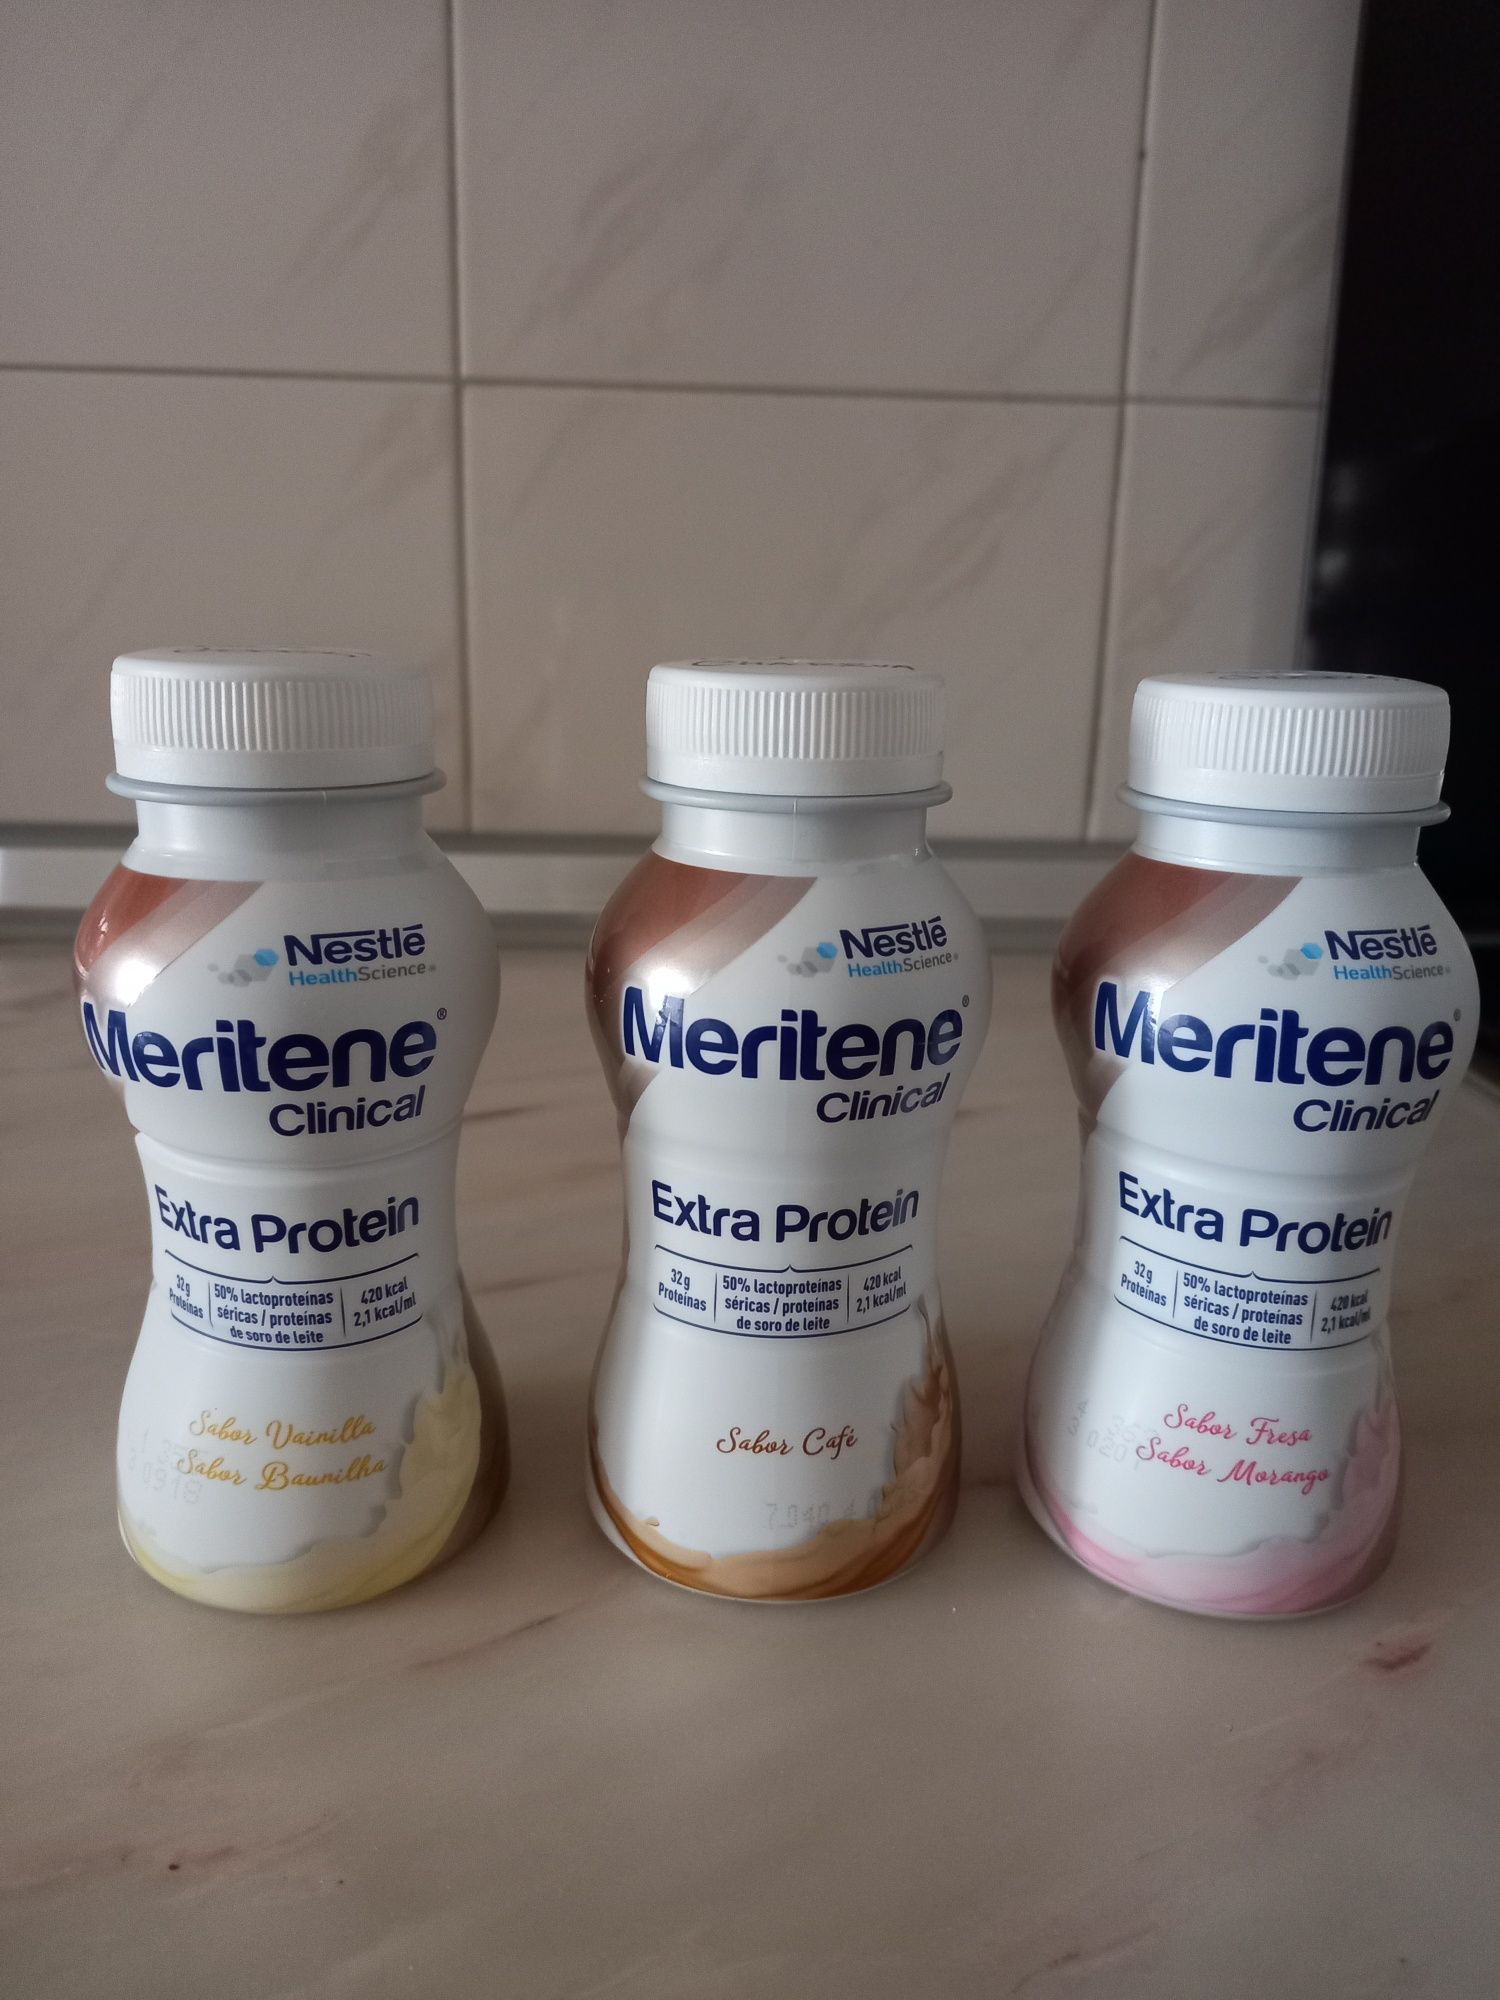 Meritene clinical extra protein - Nestlé